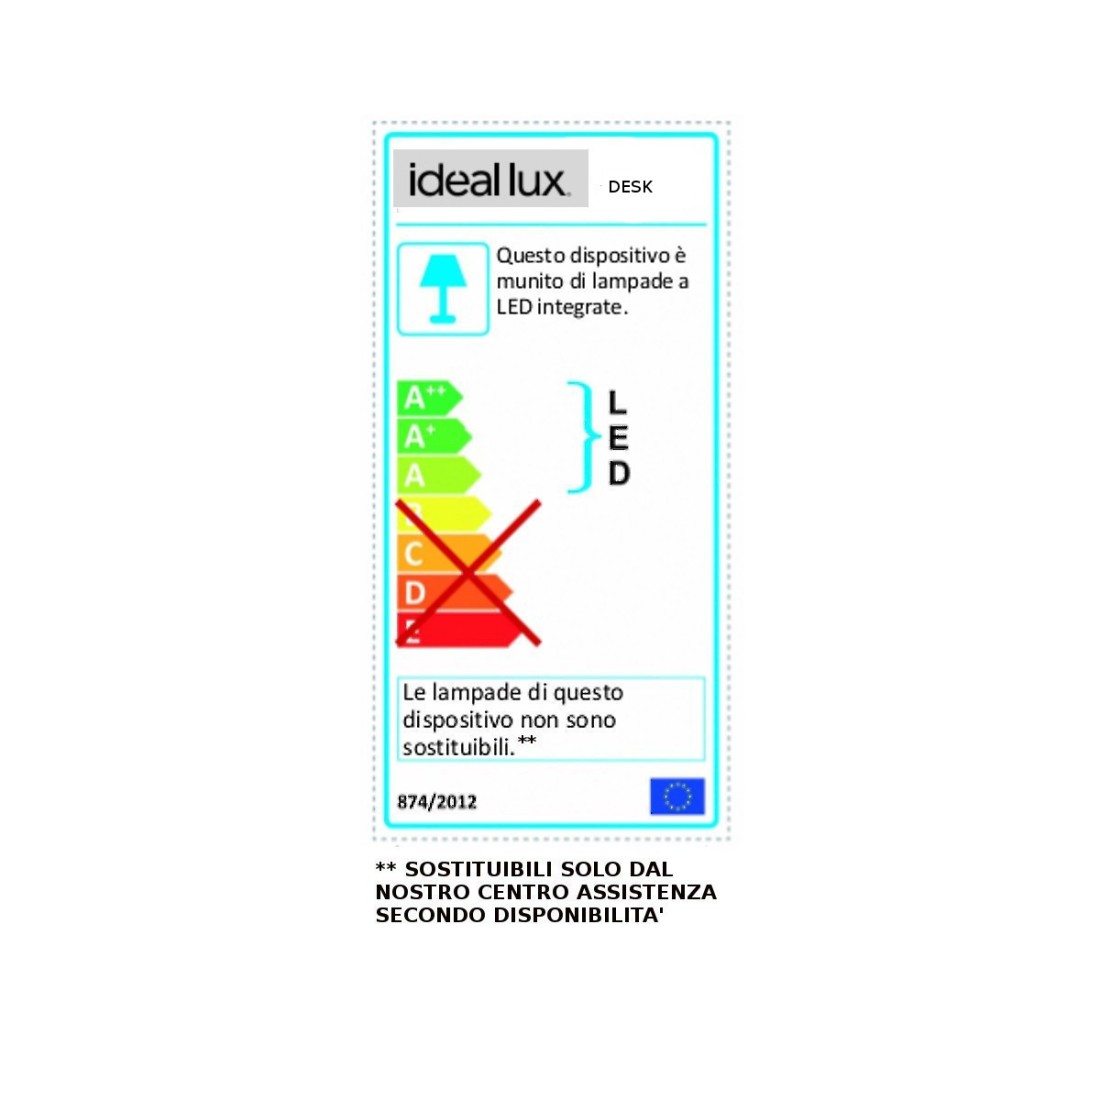 Lampadario moderno Ideal Lux DESK SP1 138237 LED